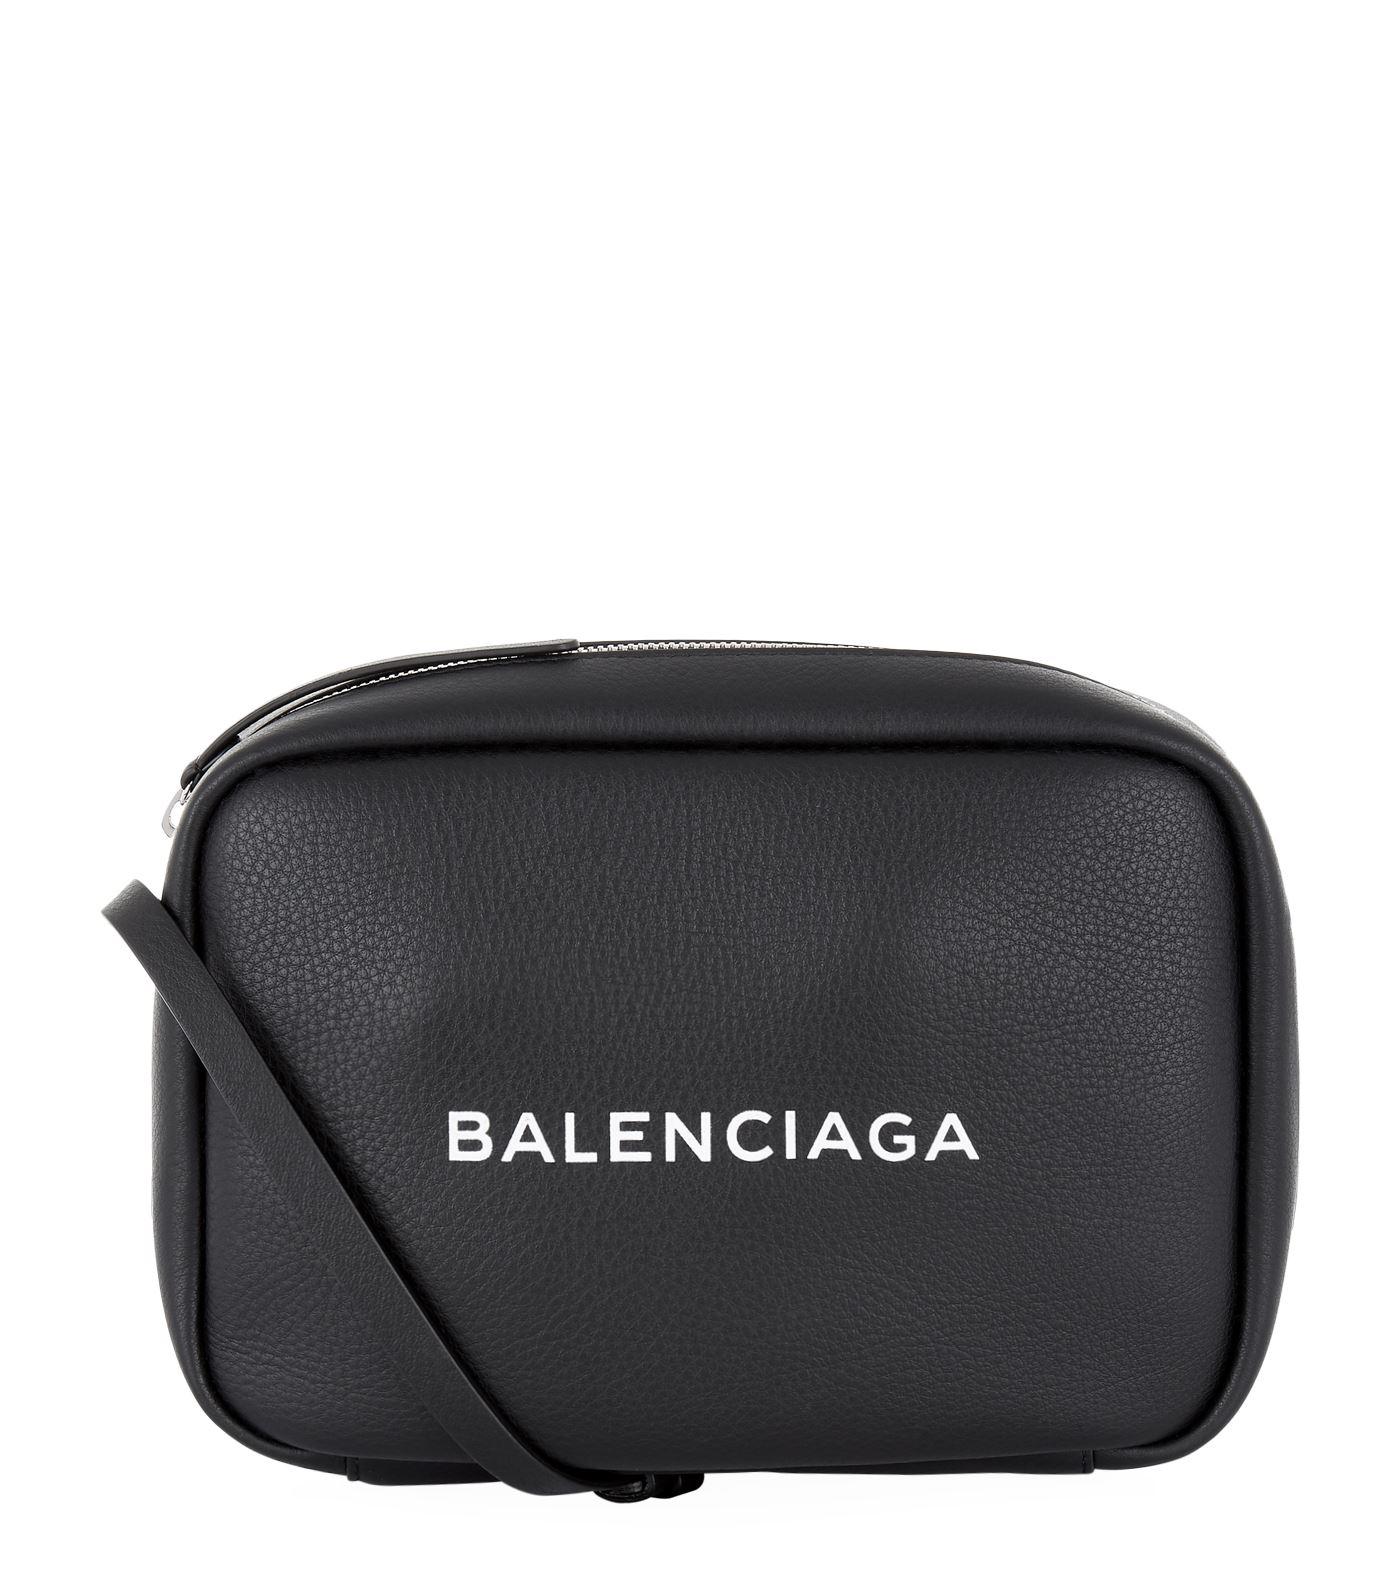 Sale Balenciaga Accessories Handbags  Shoes  fashionette